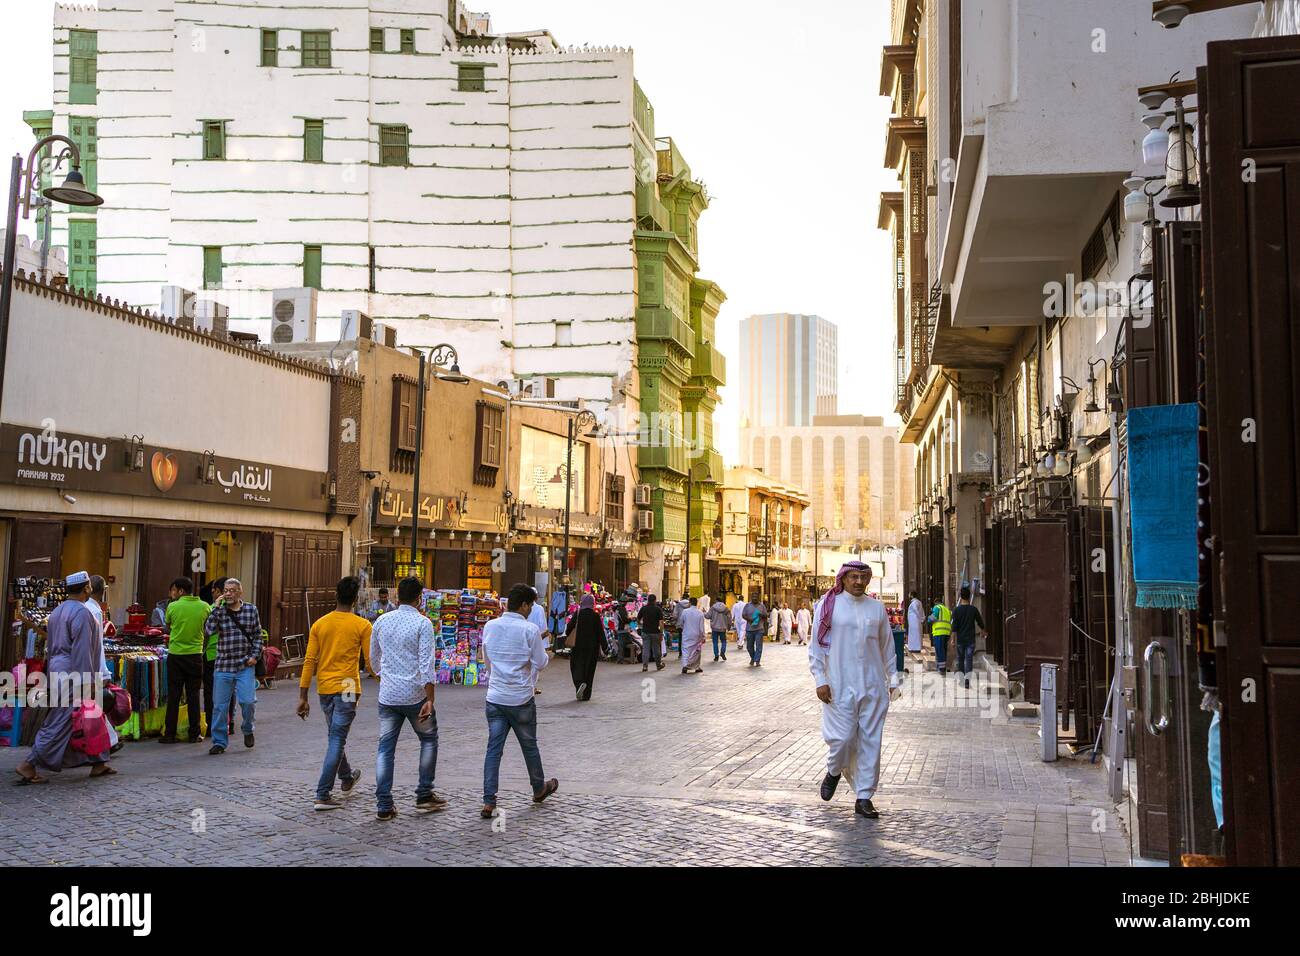 Jeddah / Saudi Arabia - January 16, 2020: People walking in the streets of historic Al-Balad UNESCO old town Stock Photo